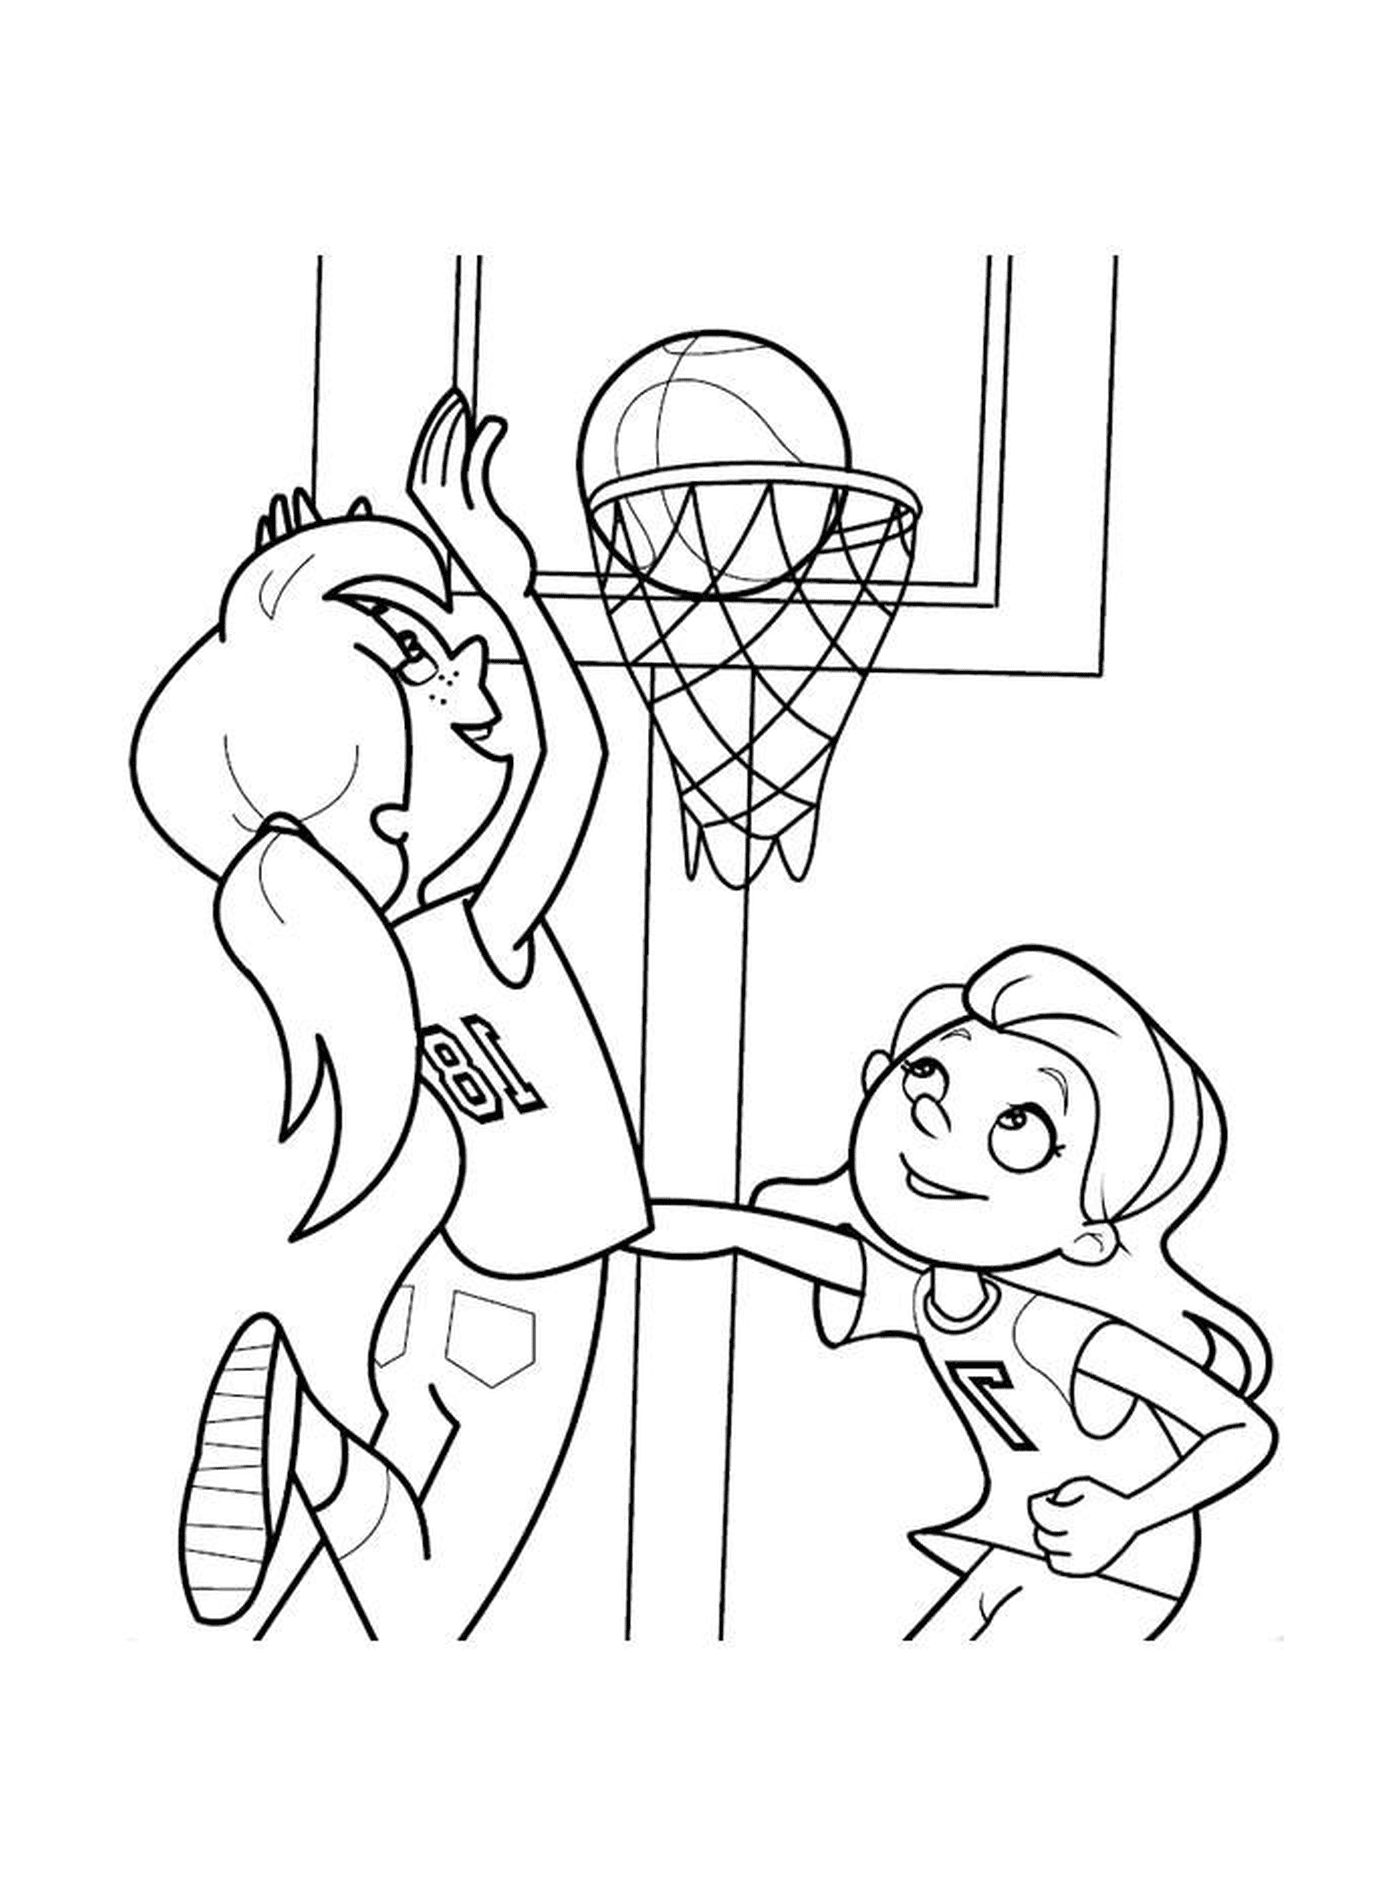  Sport, basketball, girls playing on a field 